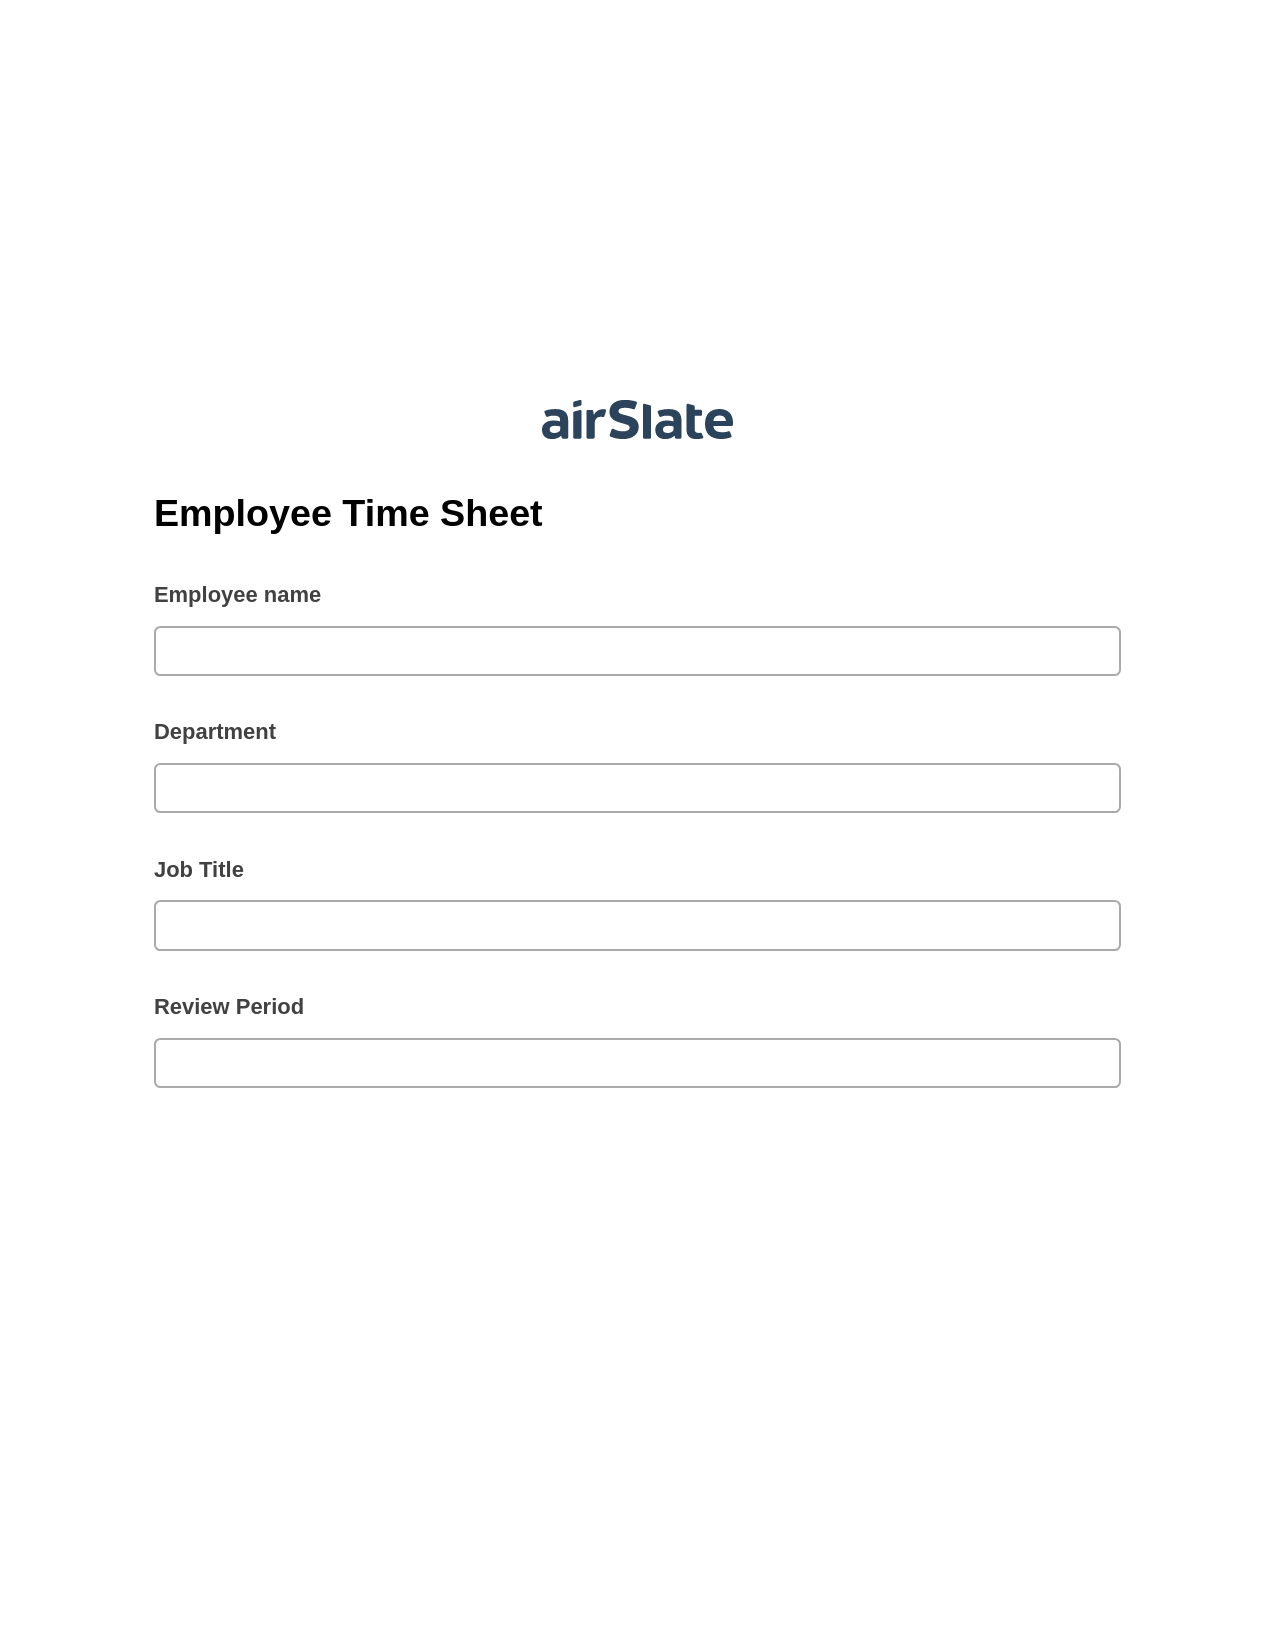 Multirole Employee Time Sheet Pre-fill from Google Sheets Bot, Update Audit Trail Bot, Email Notification Postfinish Bot